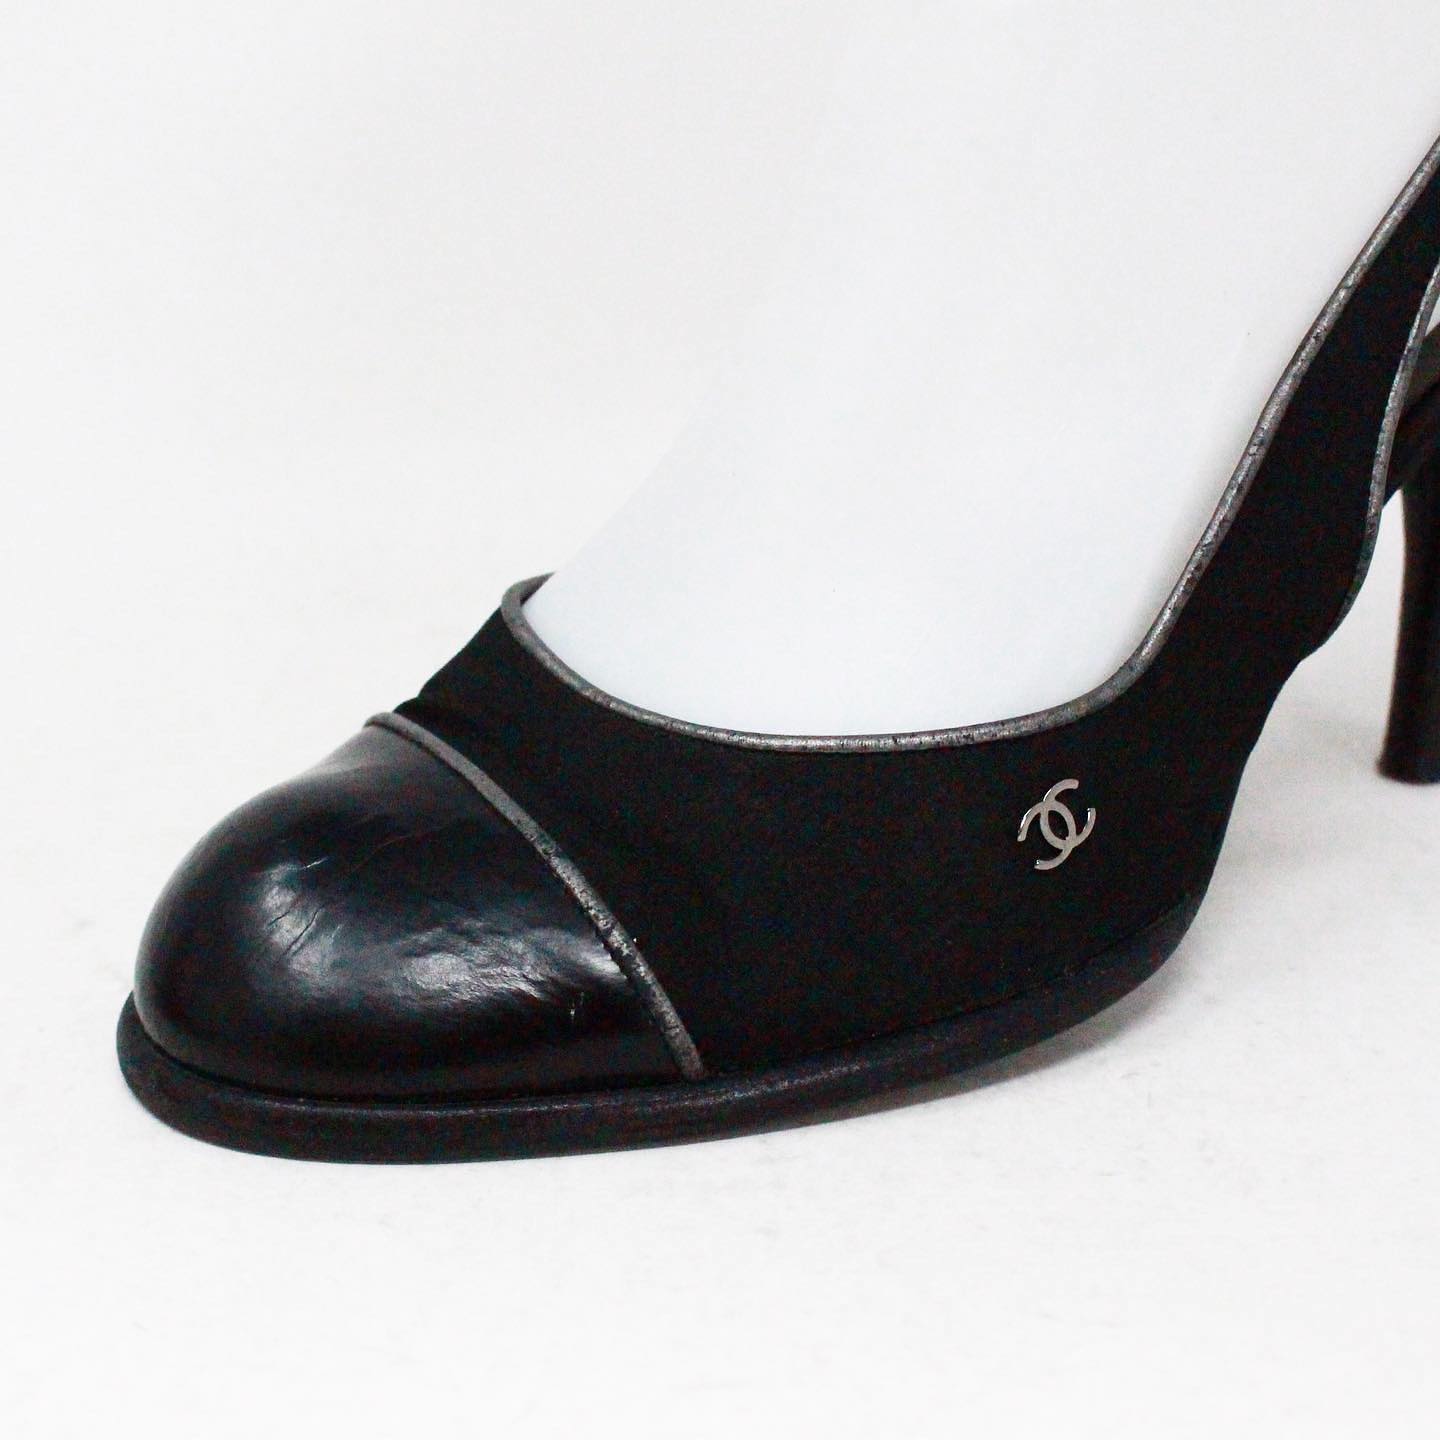 Chanel Cap Toe Pumps in Black Size 40.5